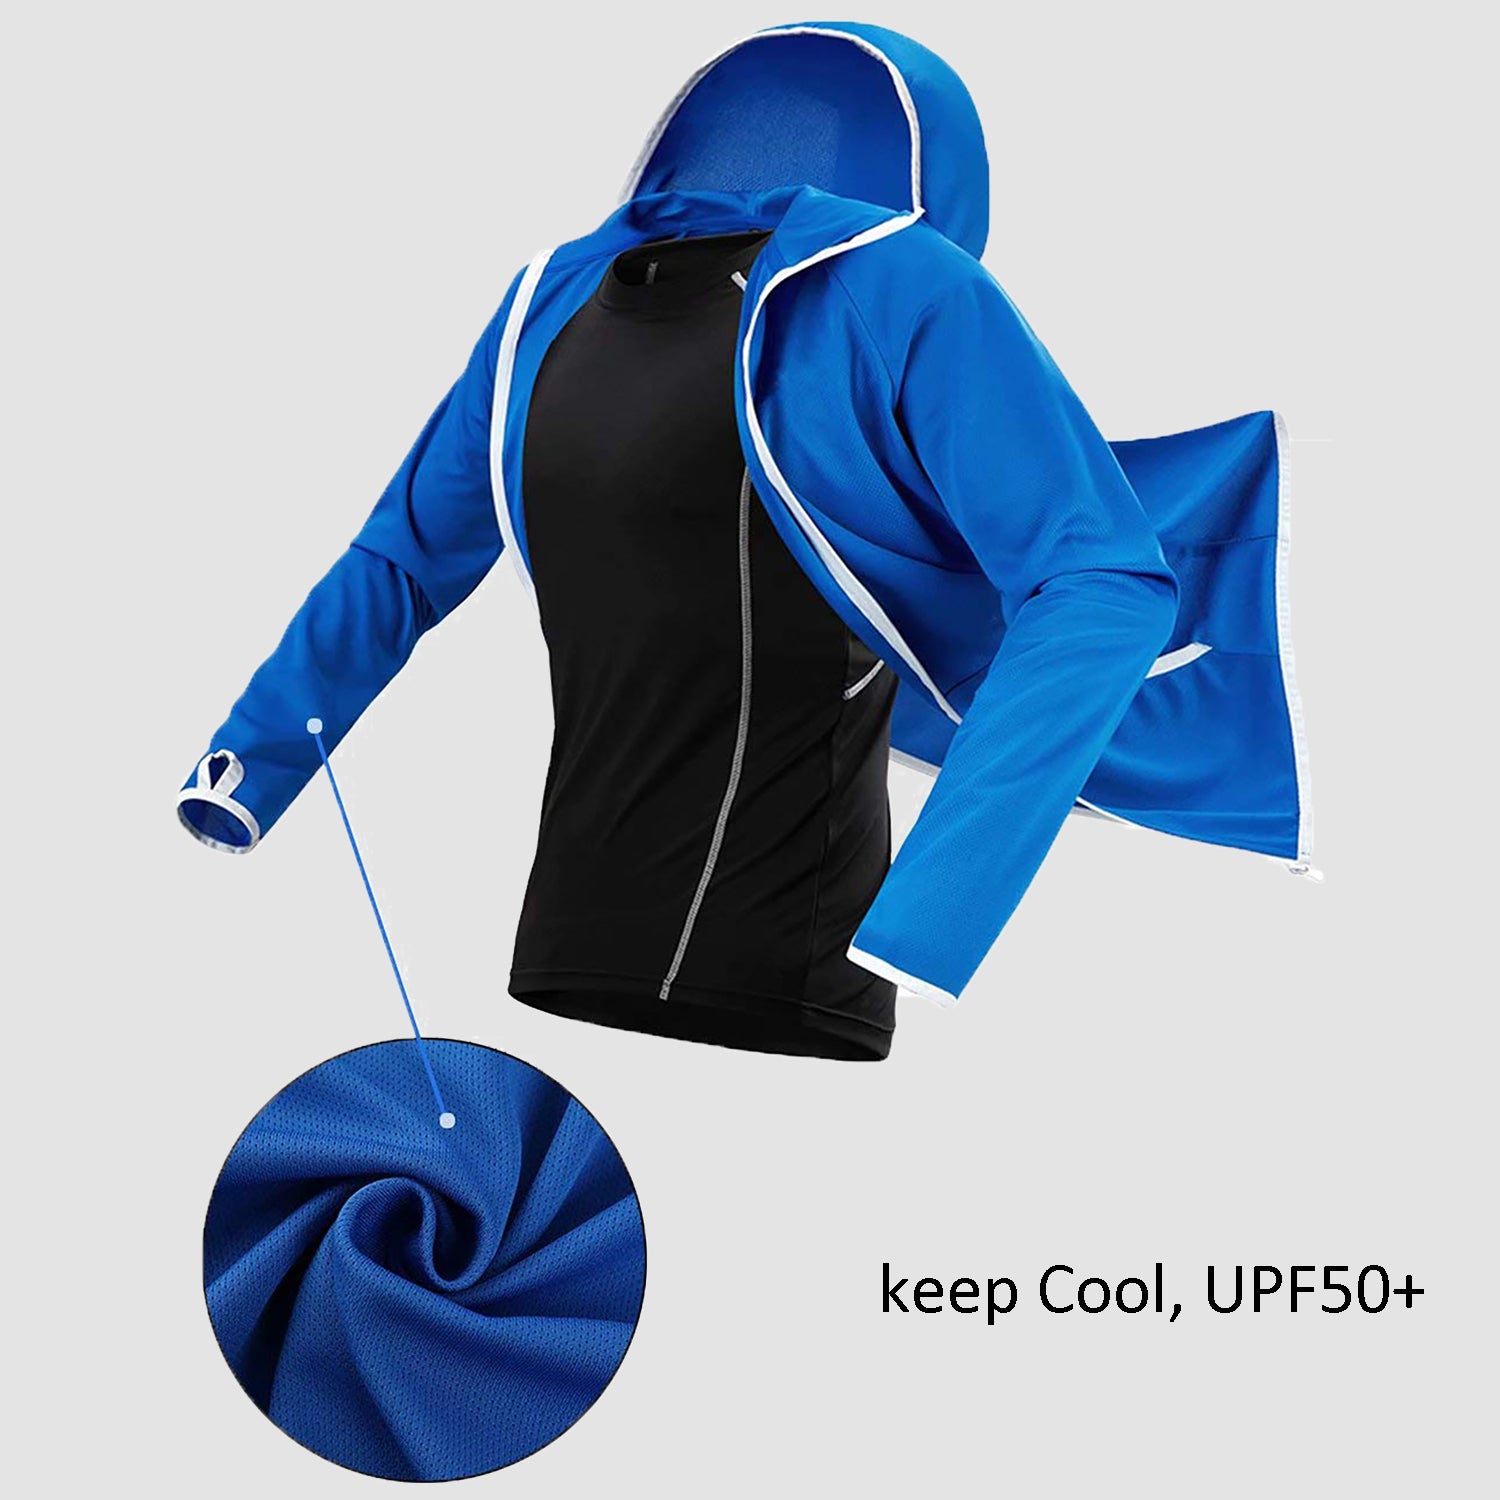 Men's Sun Protection Hoodie Jacket Athletic Jacket Zip-Up